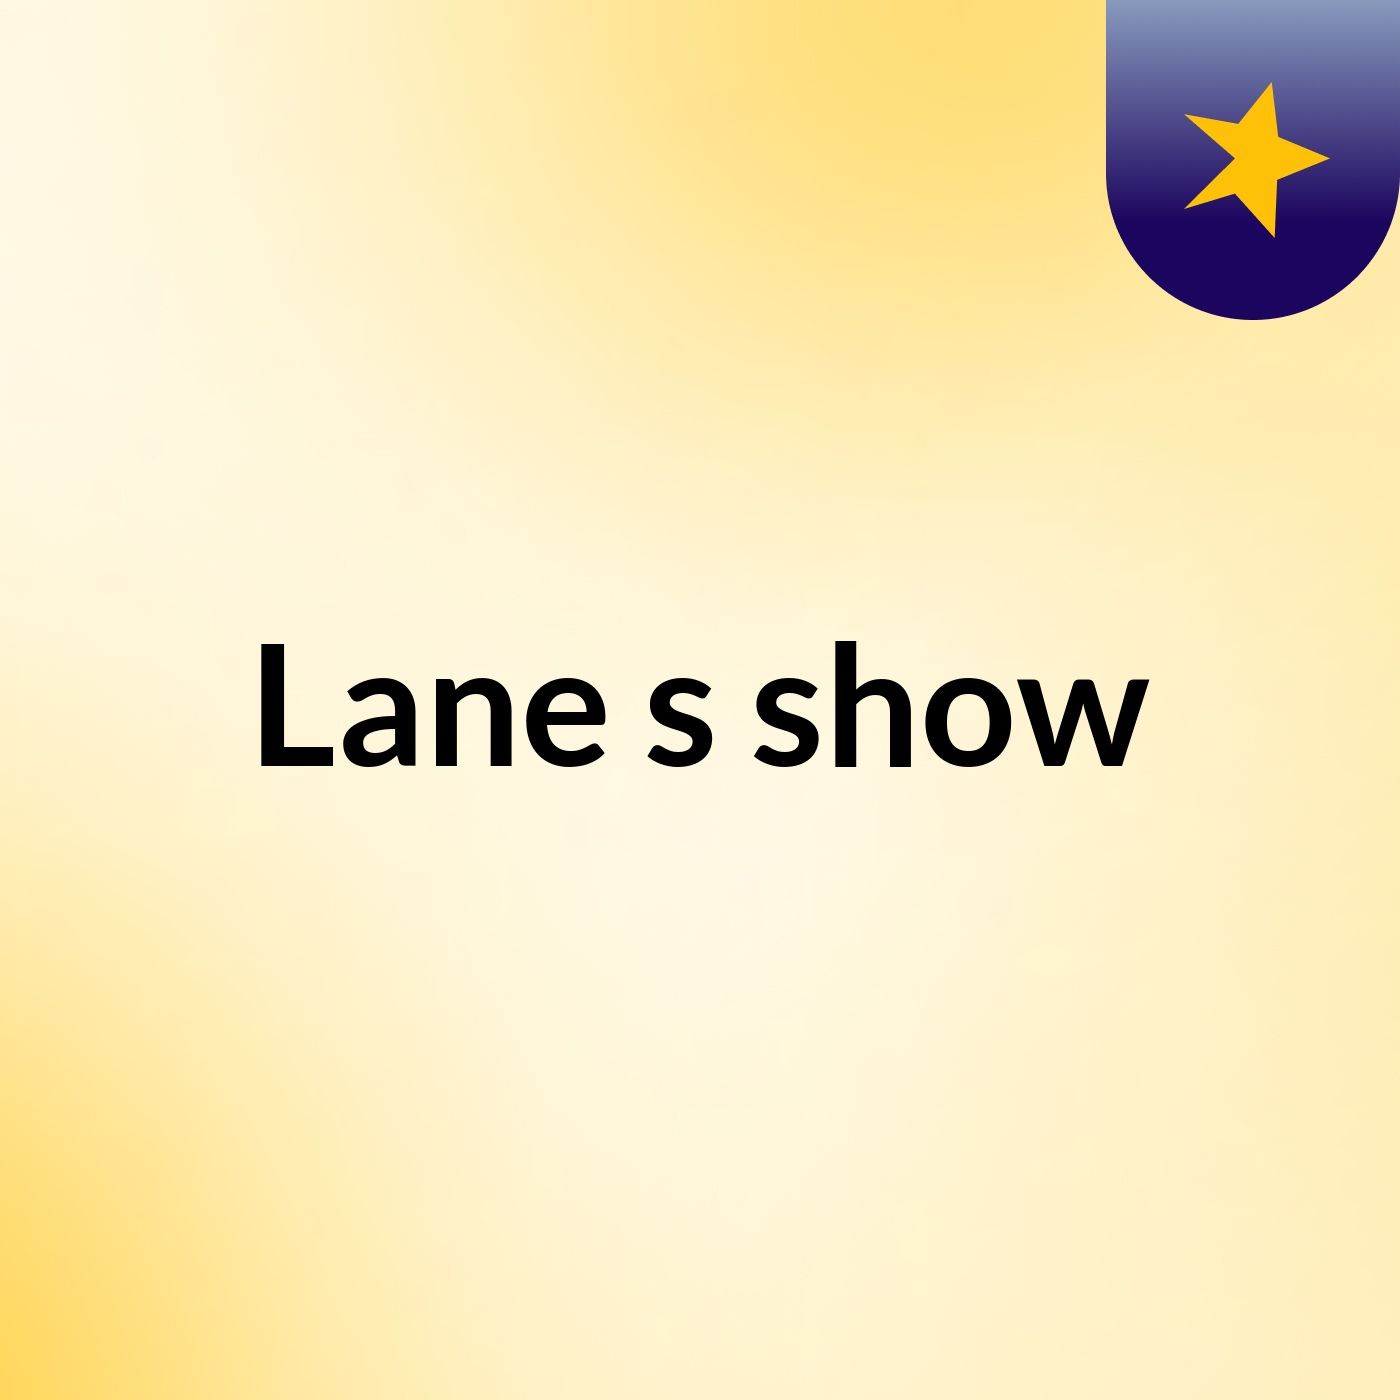 Lane's show